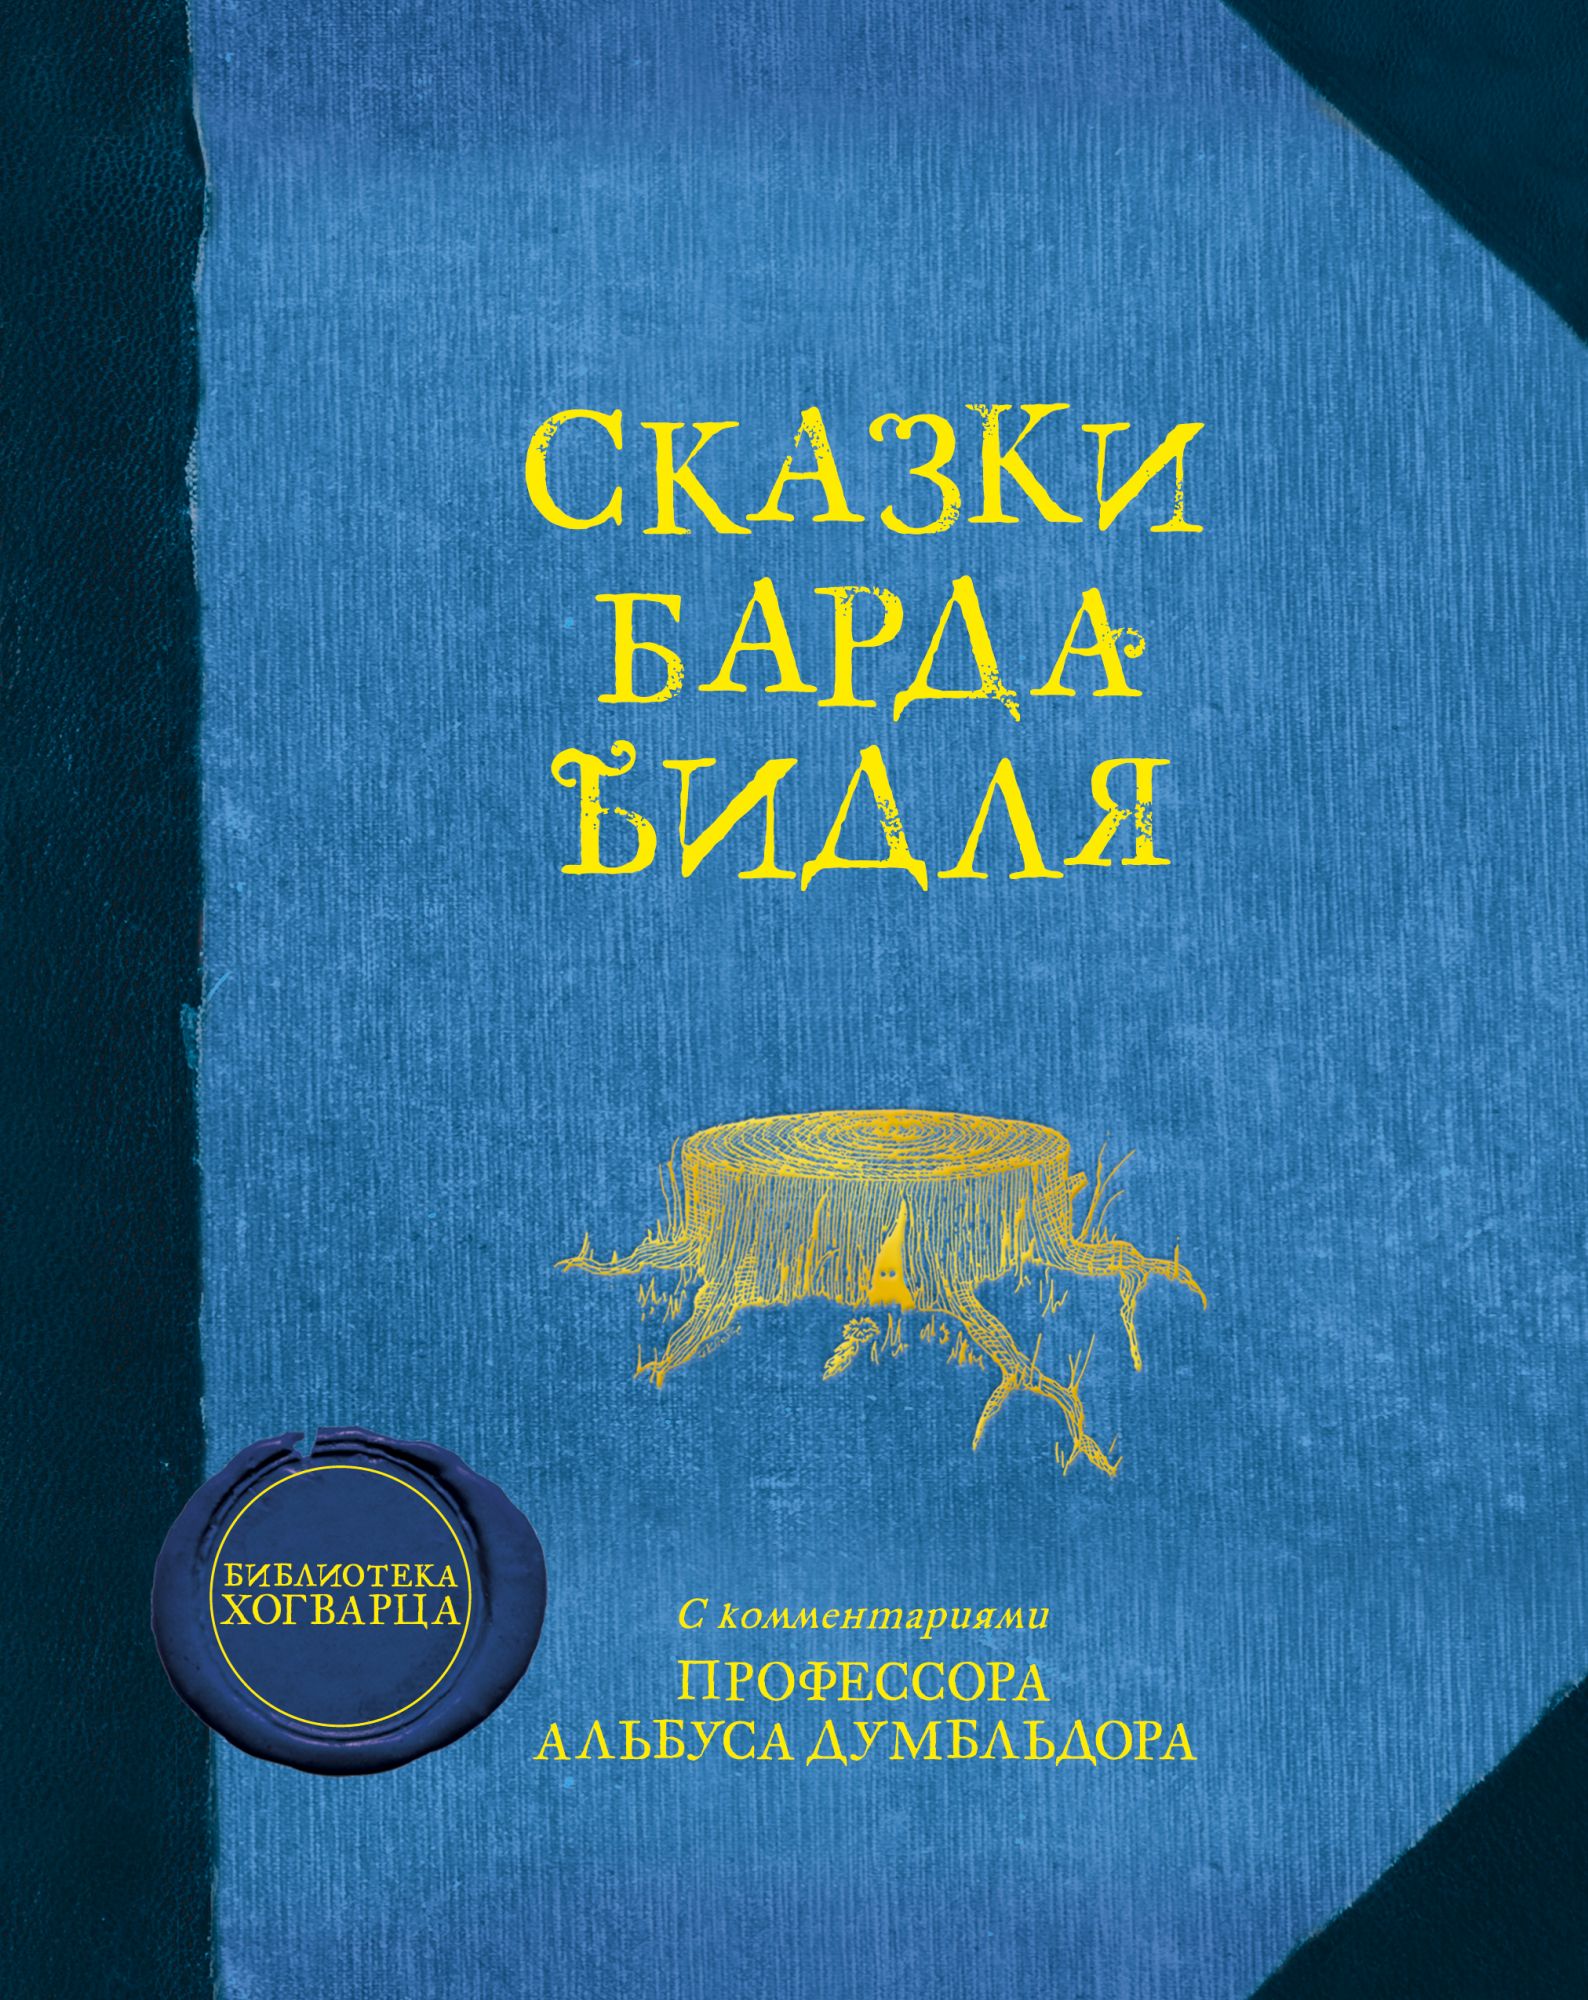 Book “Сказки барда Бидля” by Дж.К. Роулинг